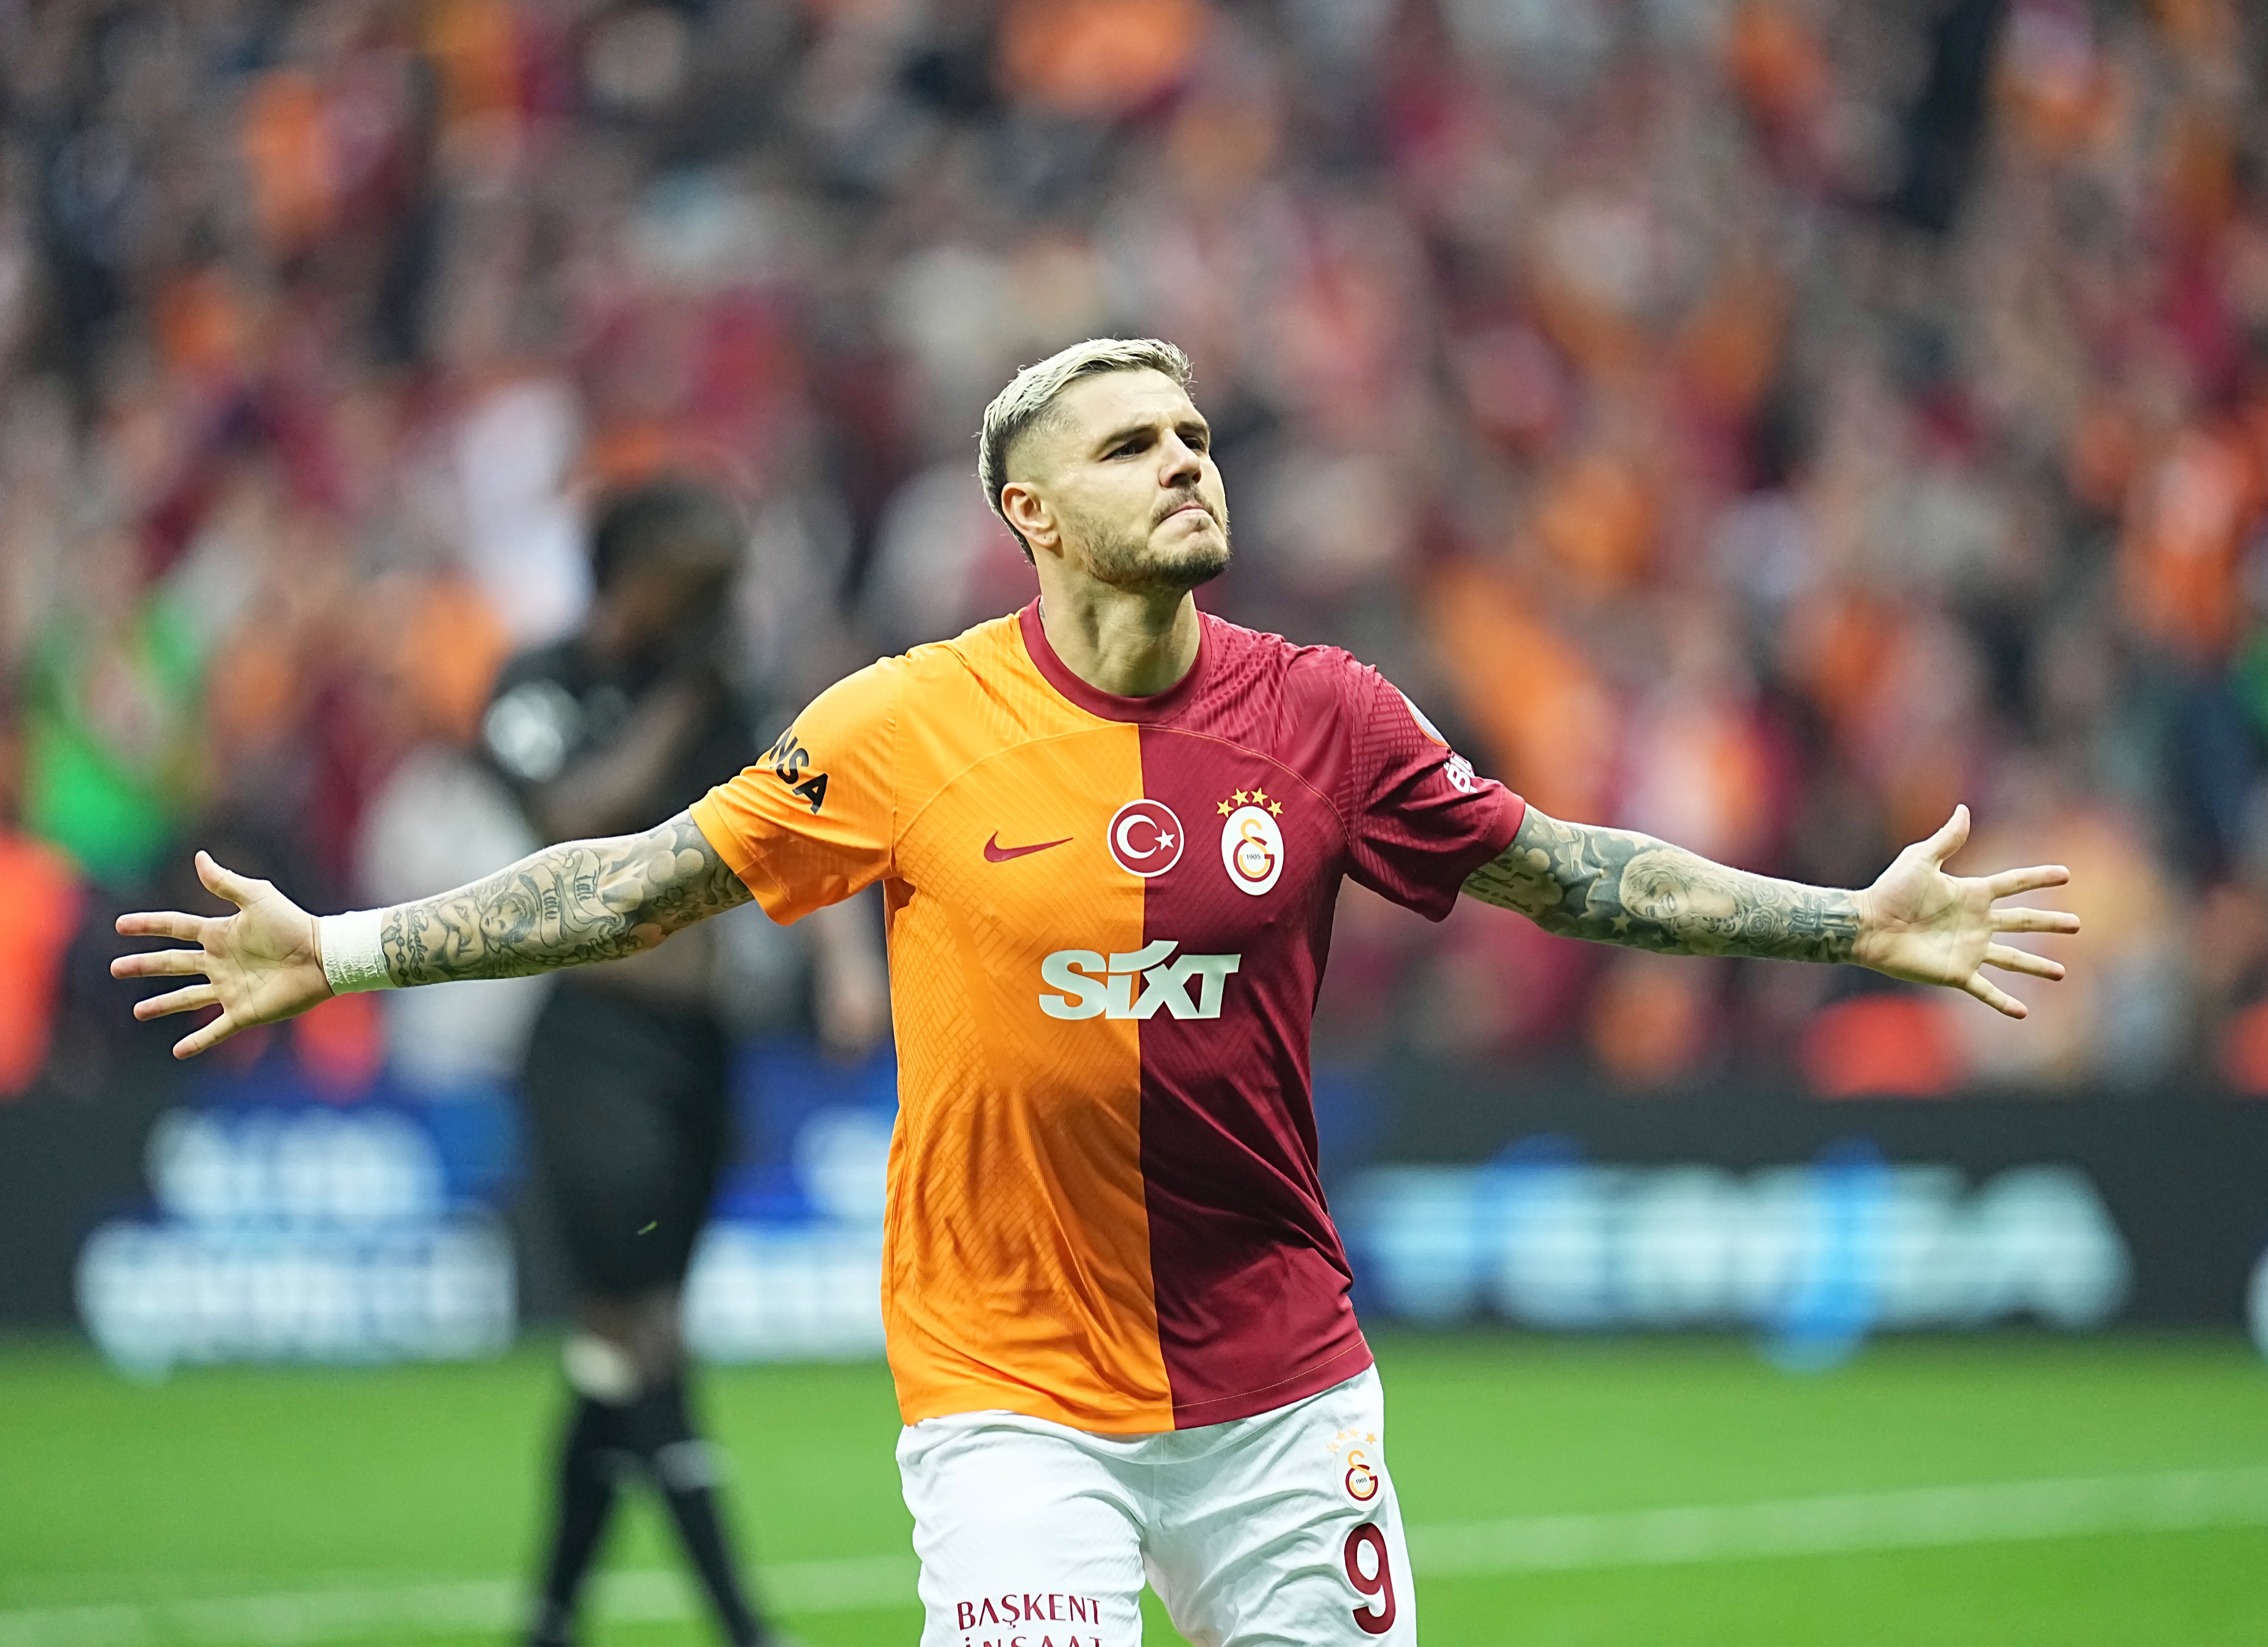 Süper Lig : Galatasaray se balade contre Pendikspor